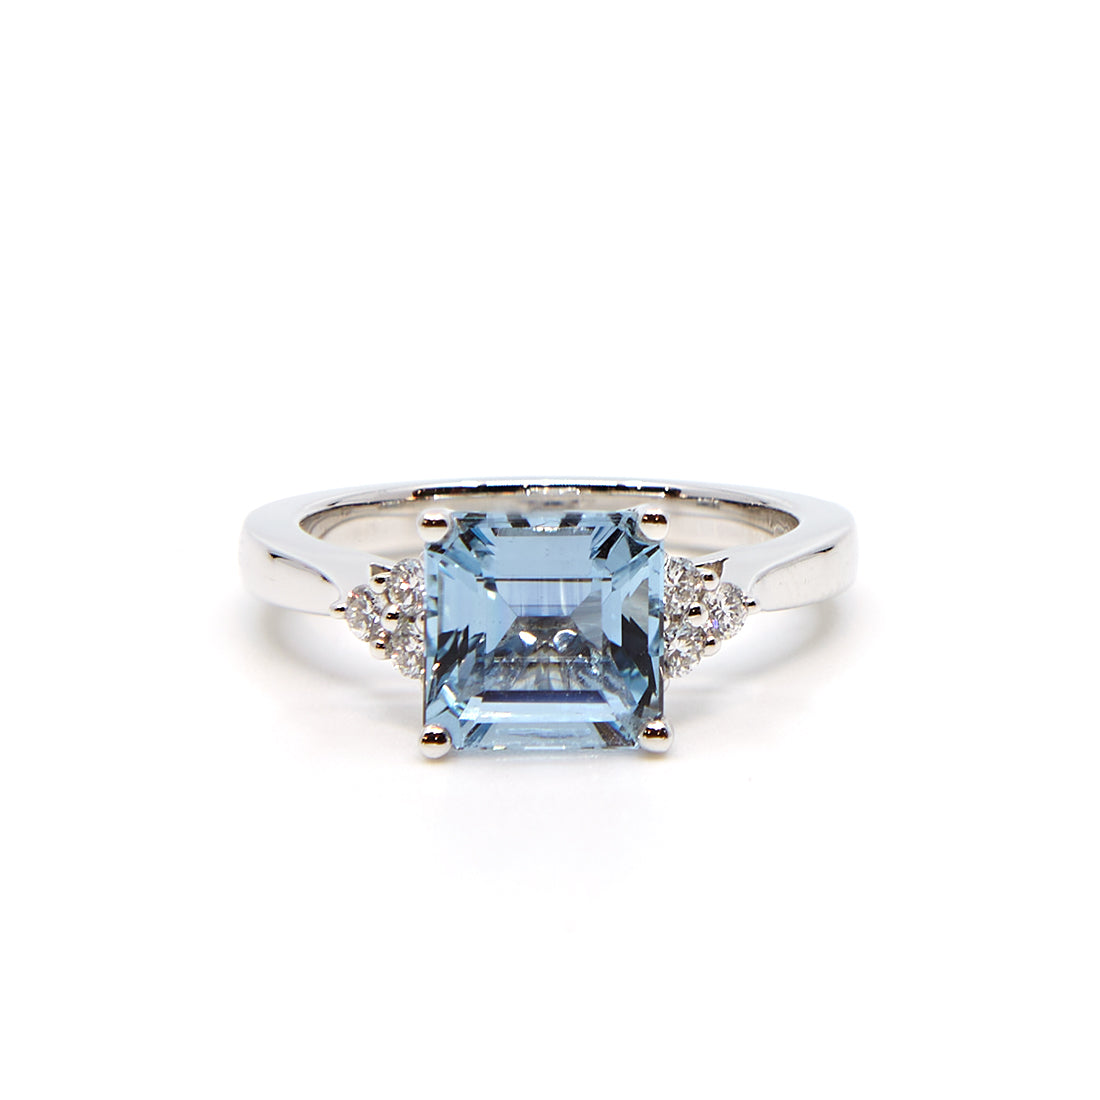 White gold ring with aquamarine and diamond